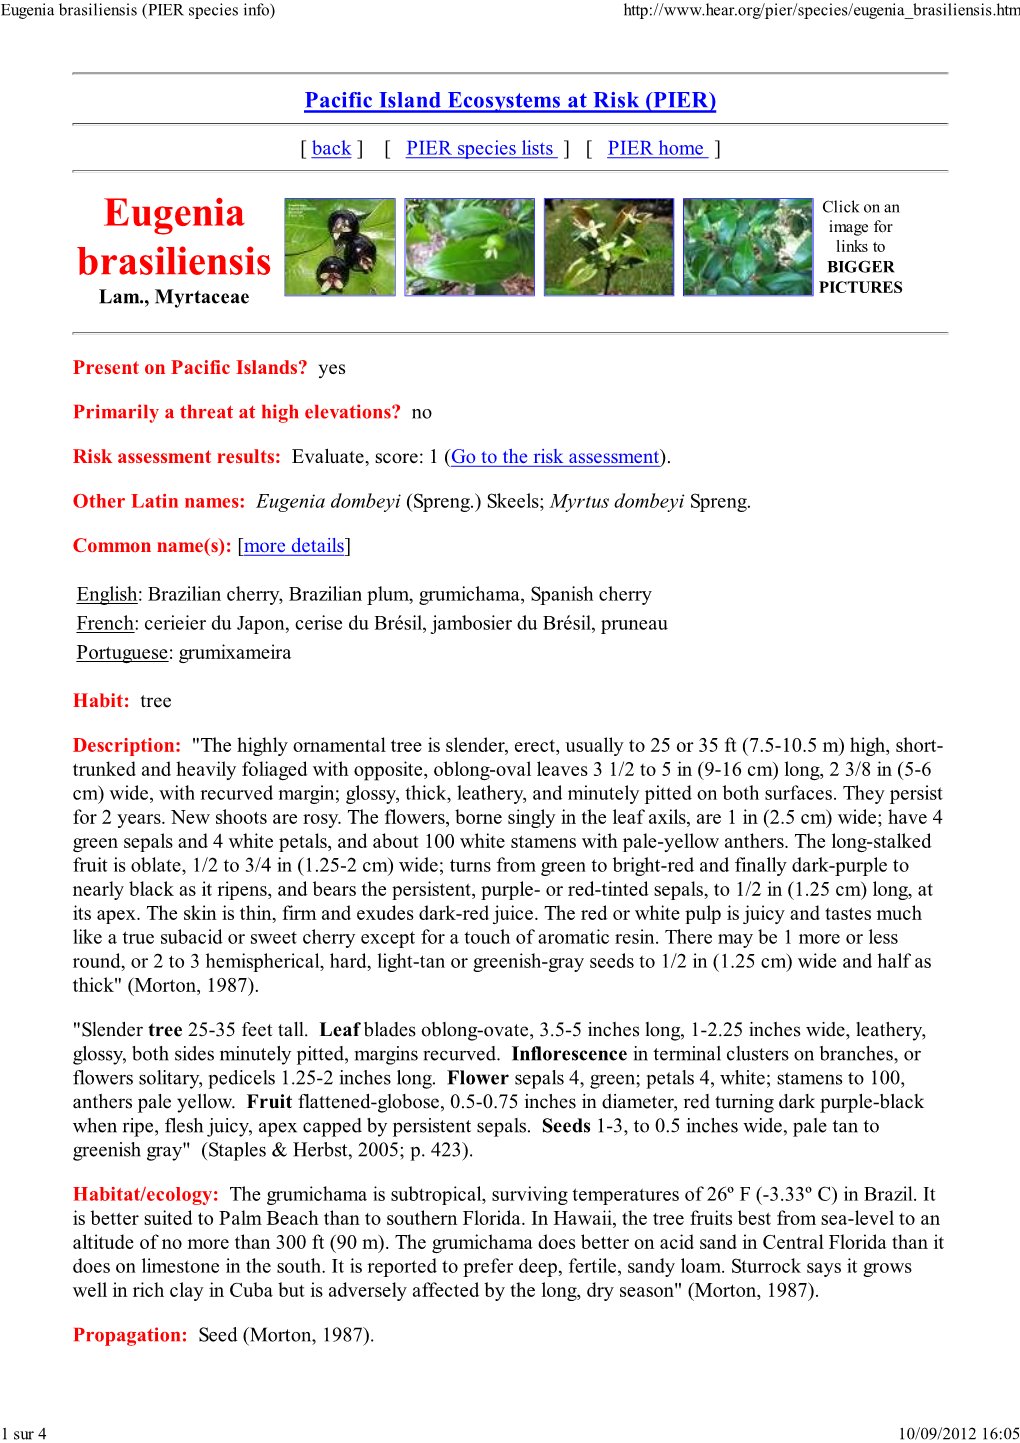 Eugenia Brasiliensis (PIER Species Info)